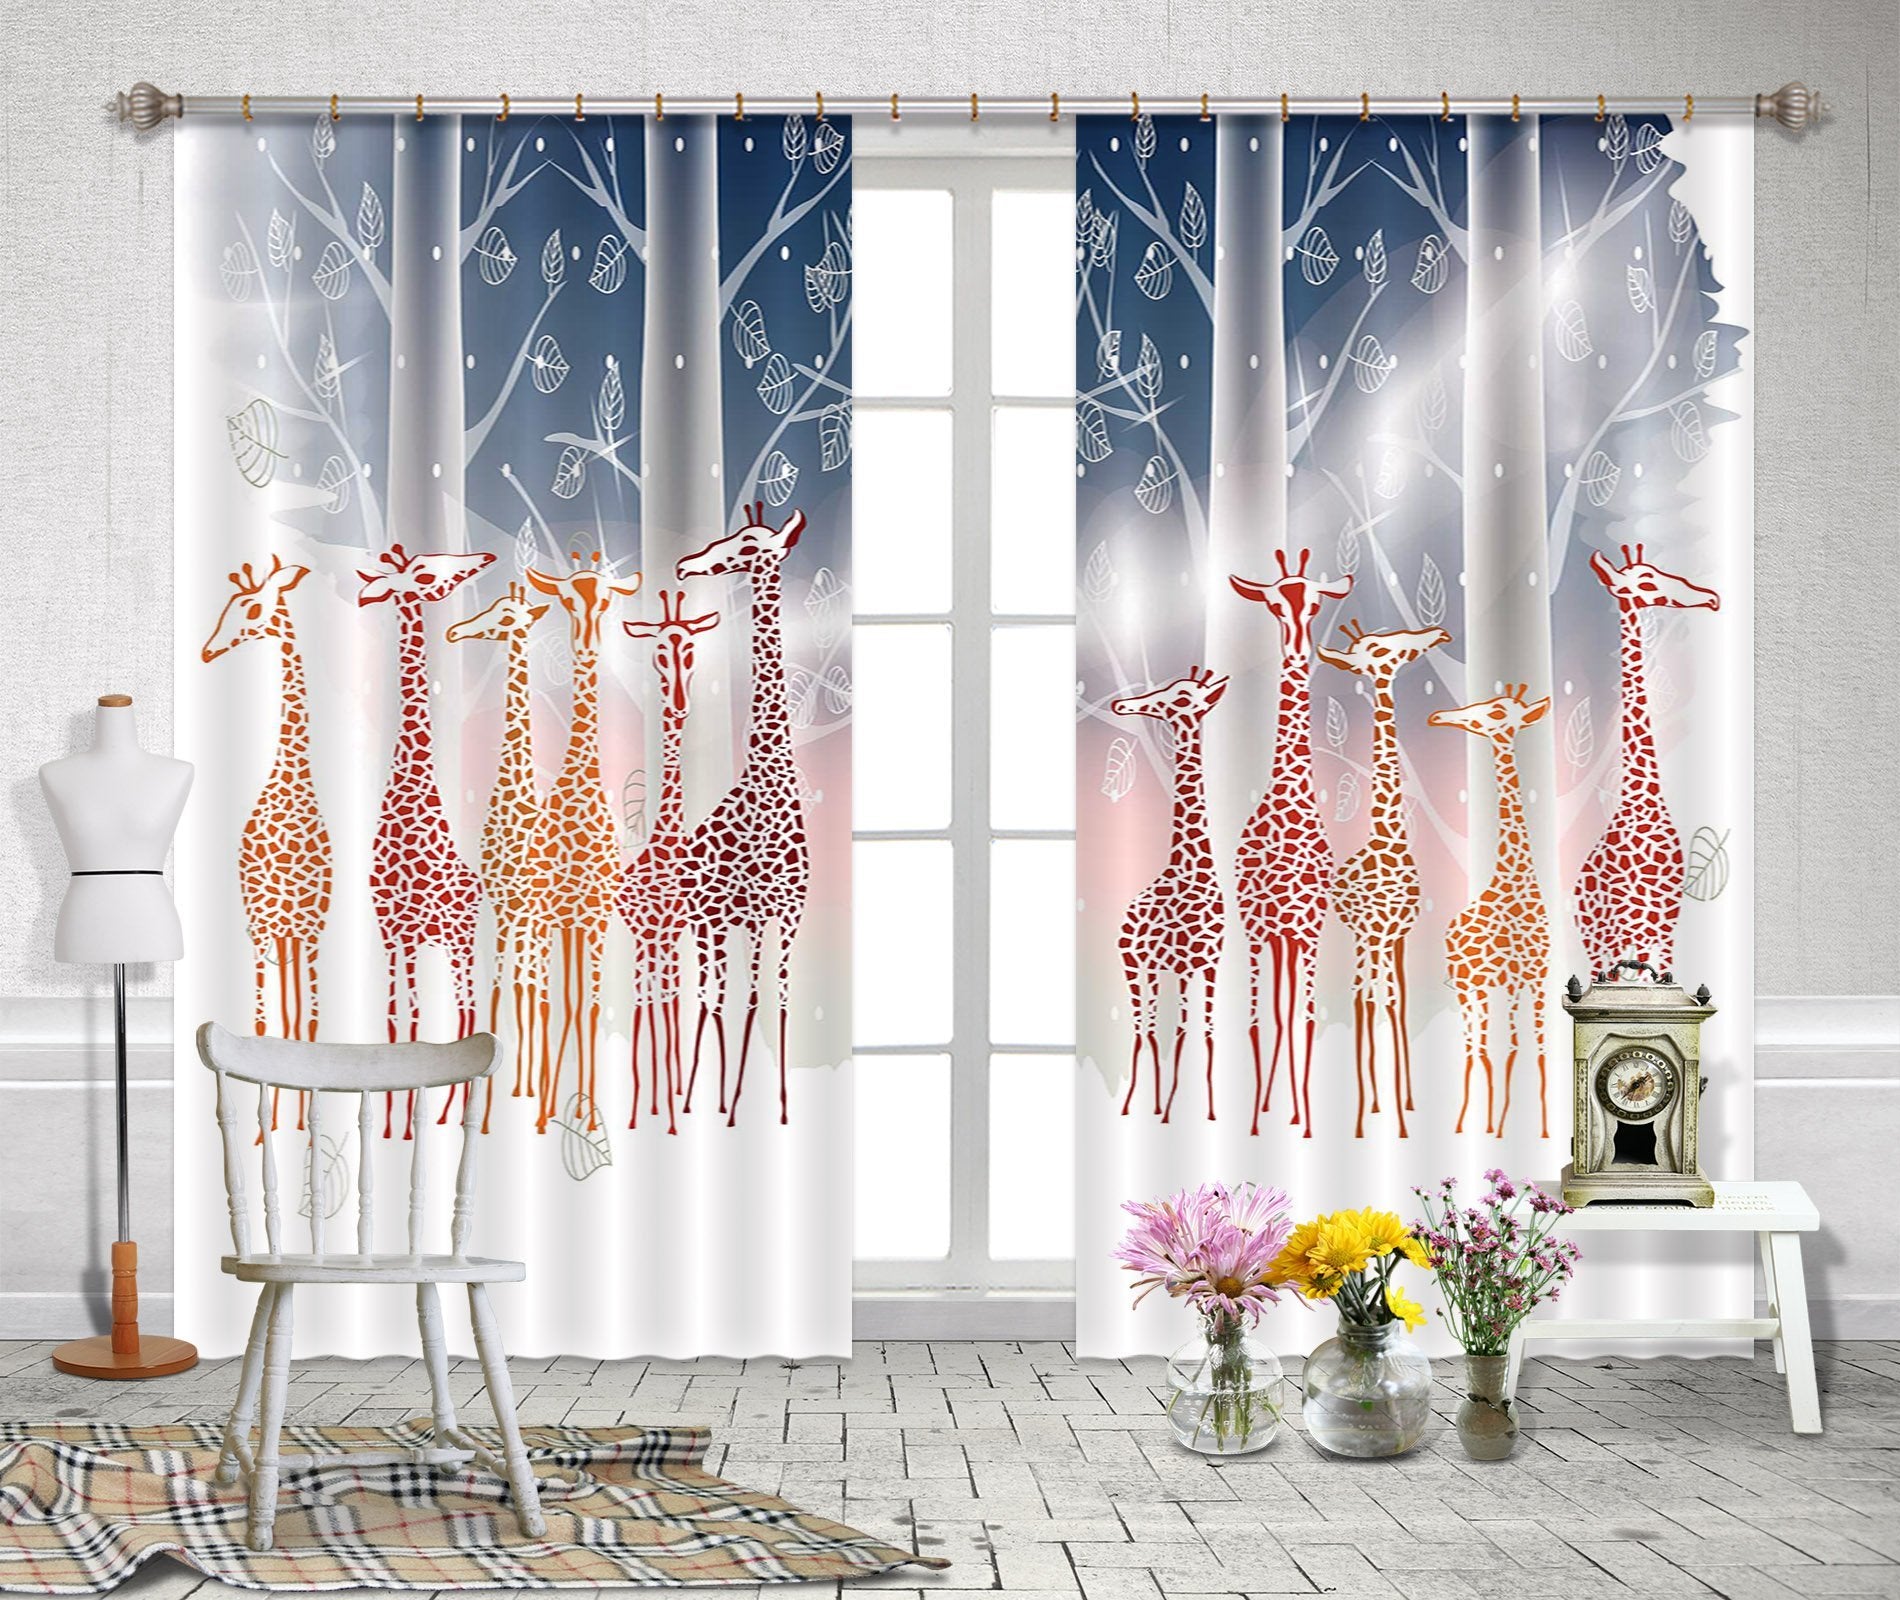 3D Giraffes And Trees 2230 Curtains Drapes Wallpaper AJ Wallpaper 